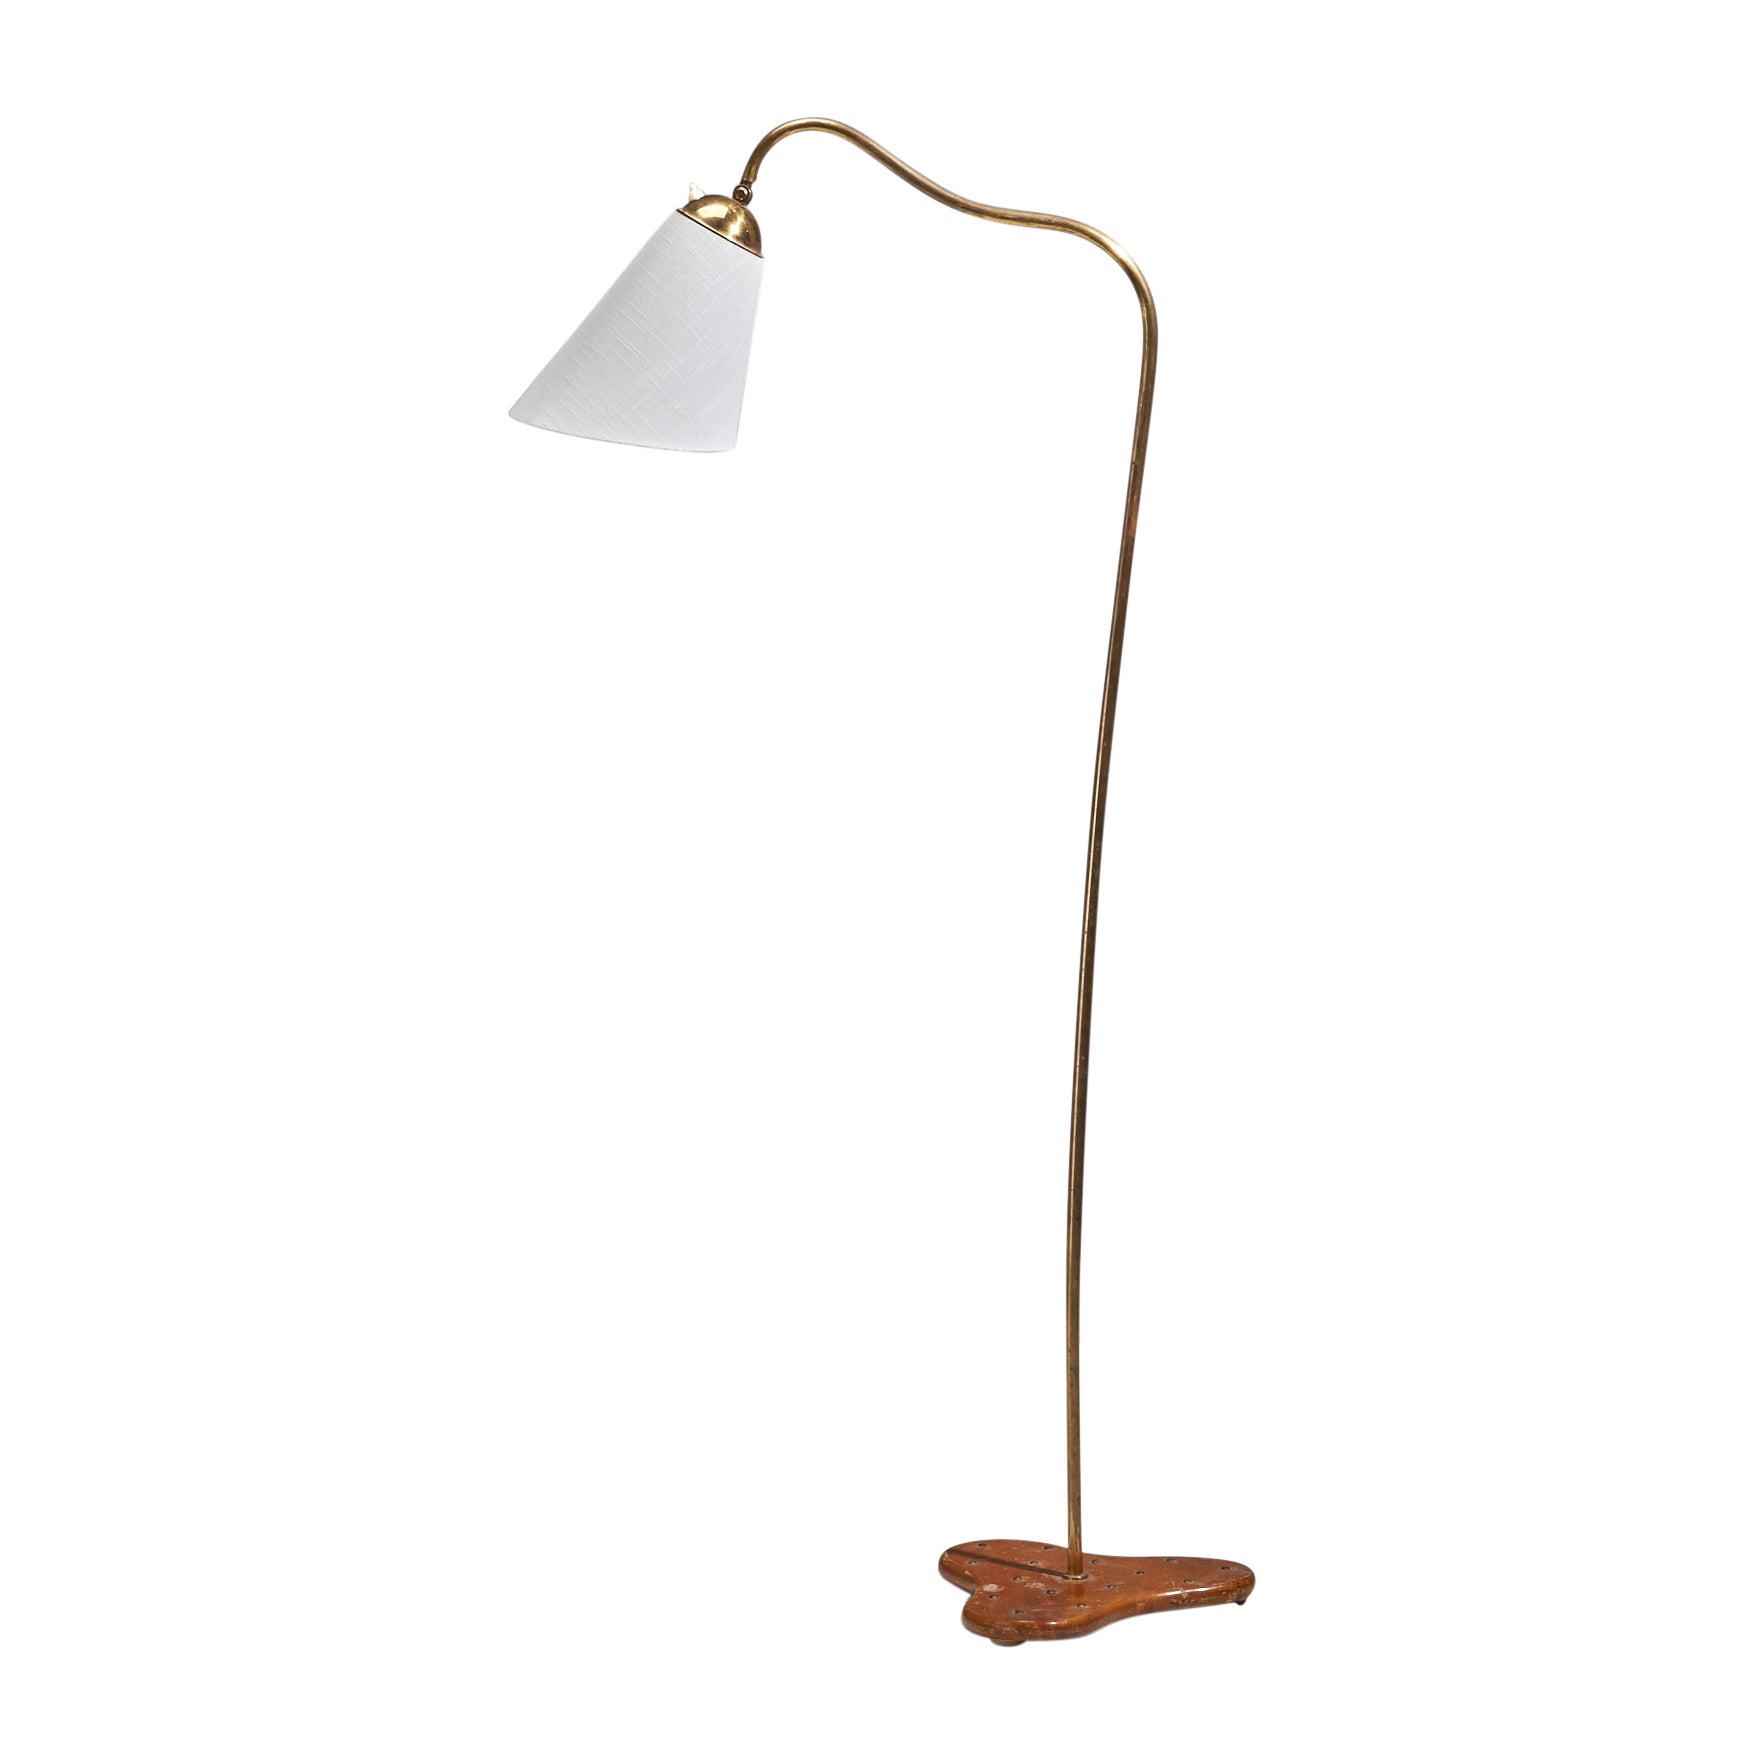 Böhlmarks Attribution, Adjustable Floor Lamp, Brass, Wood, Fabric, Sweden, 1930s For Sale